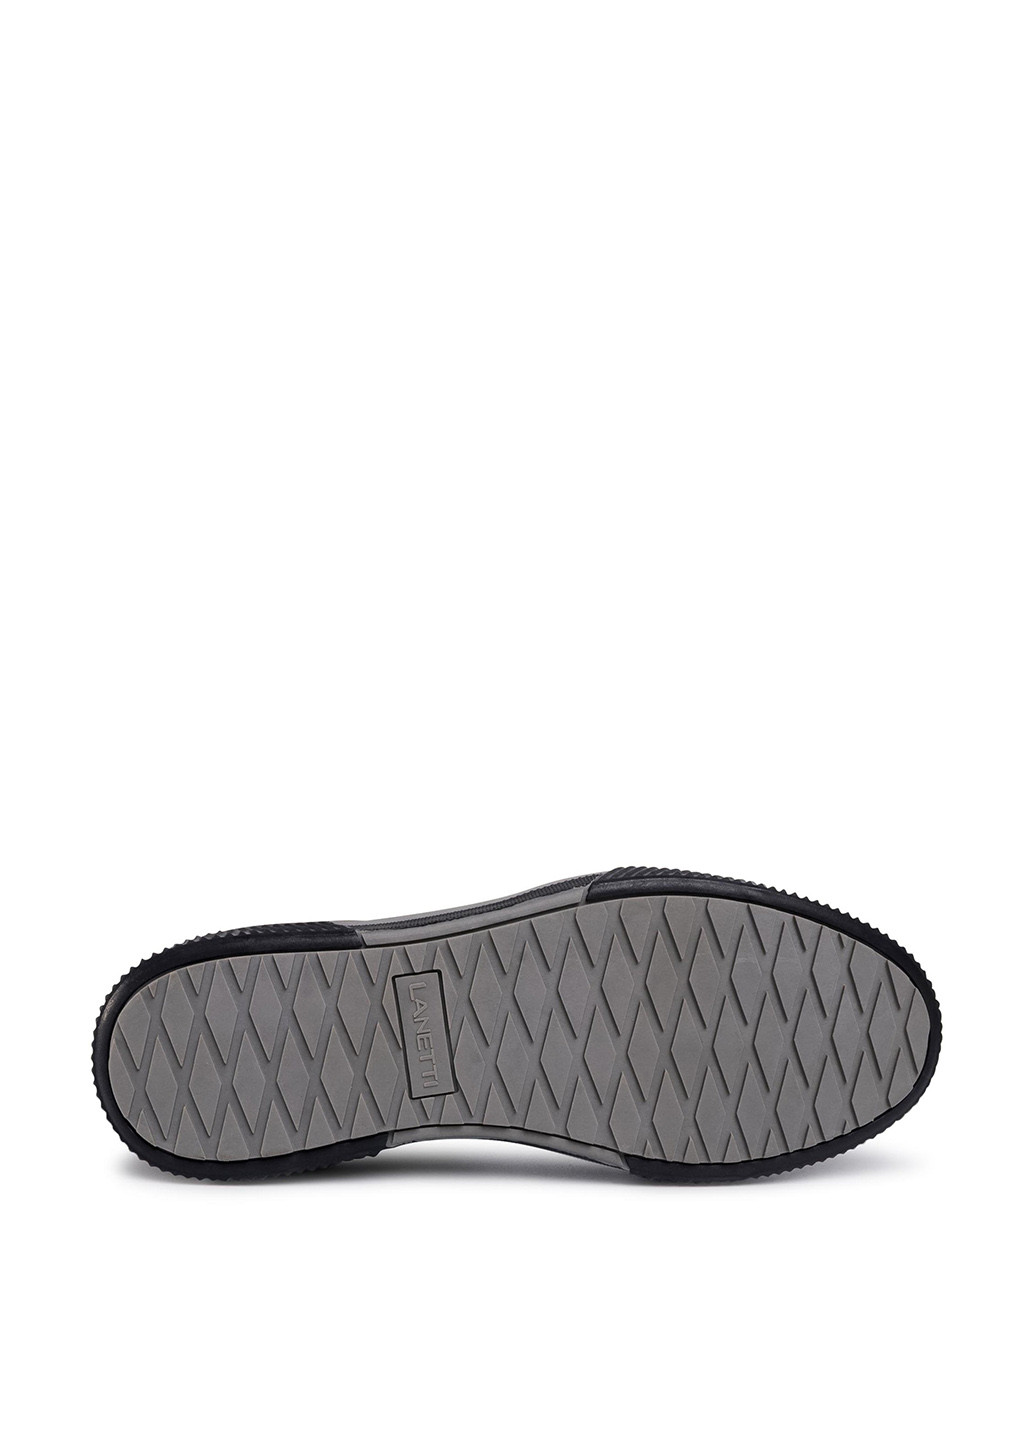 Серые осенние черевики mp40-9055y Lanetti